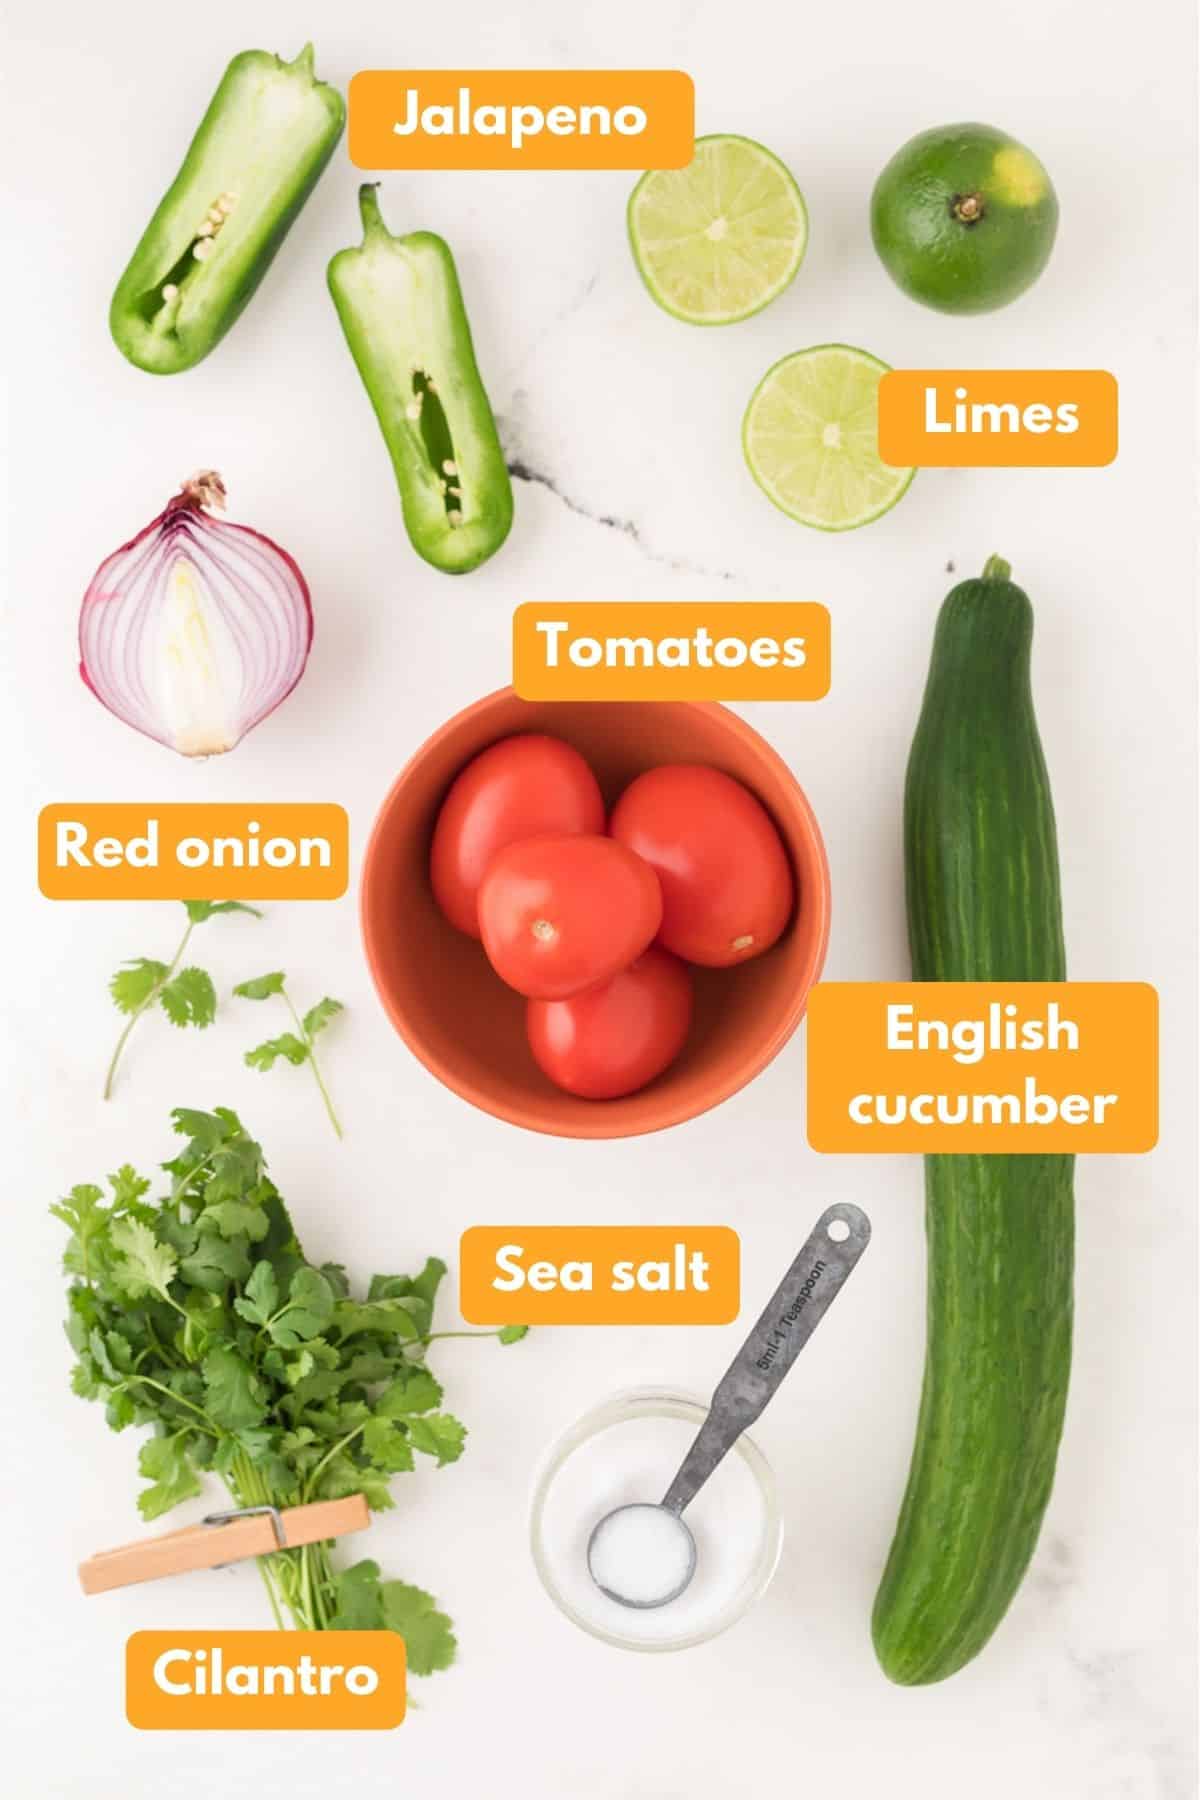 Ingredients for cucumber pico de gallo